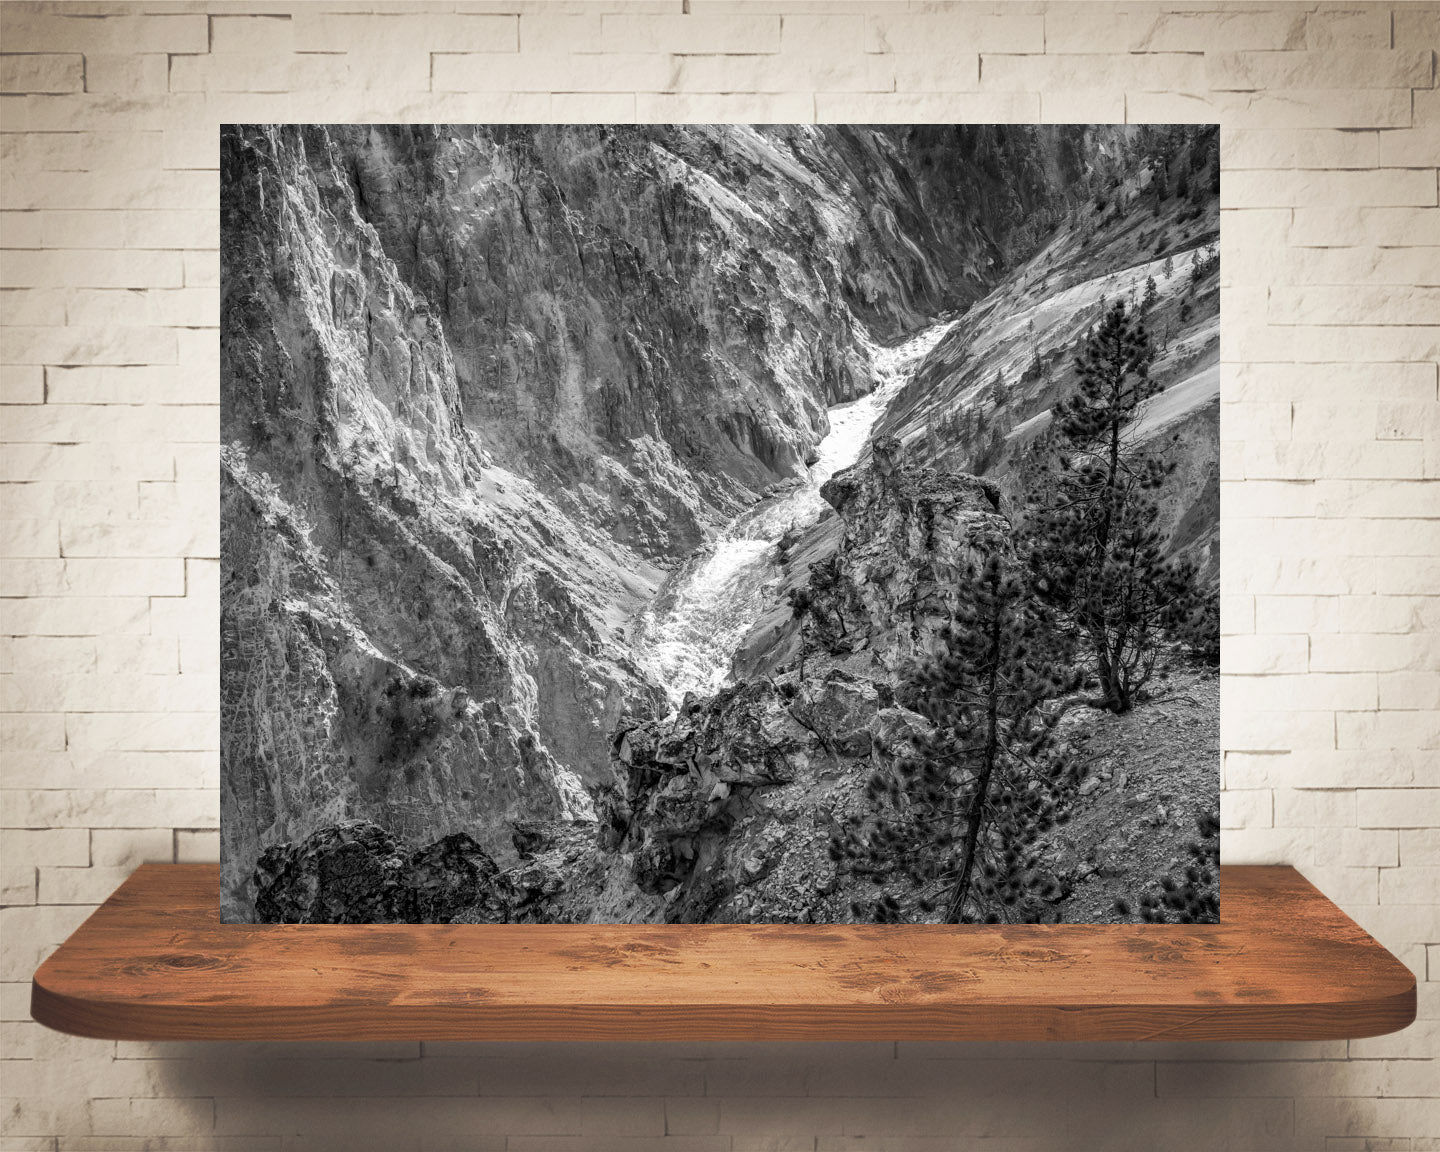 Yellowstone Canyon River Photograph Black White